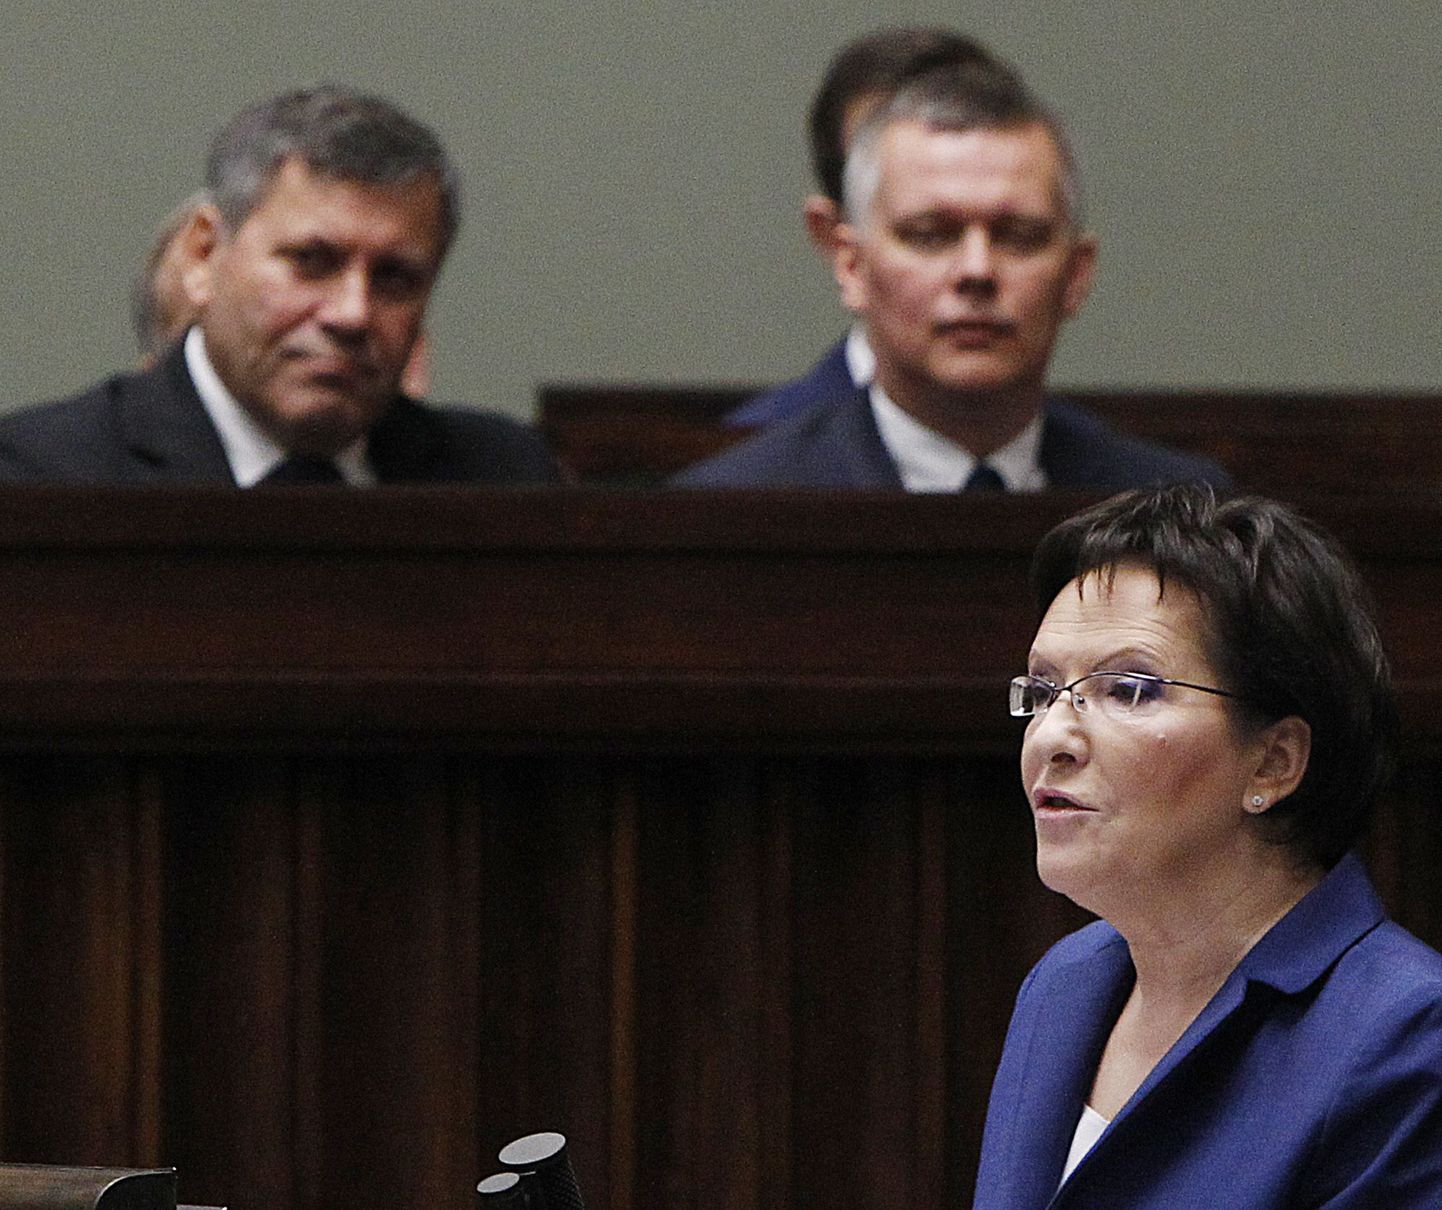 Poola uus peaminister Ewa Kopacz kõnet pidamas.